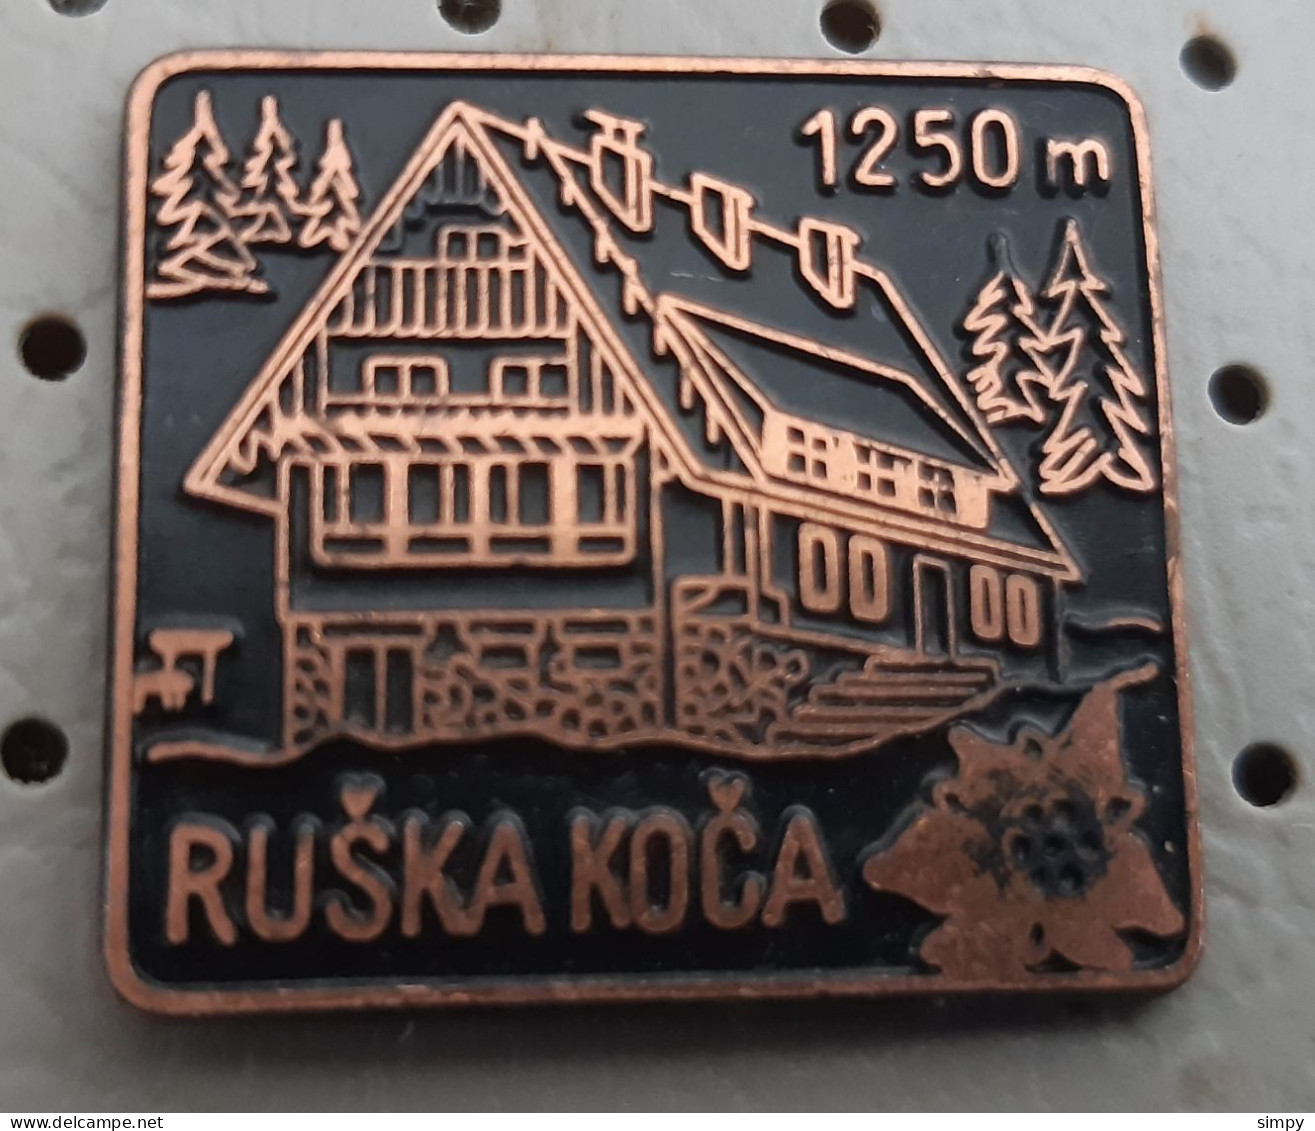 Ruska Koca 1250m Mountain Lodge Mountaineering Slovenia Ex Yugoslavia Pin - Alpinismo, Escalada